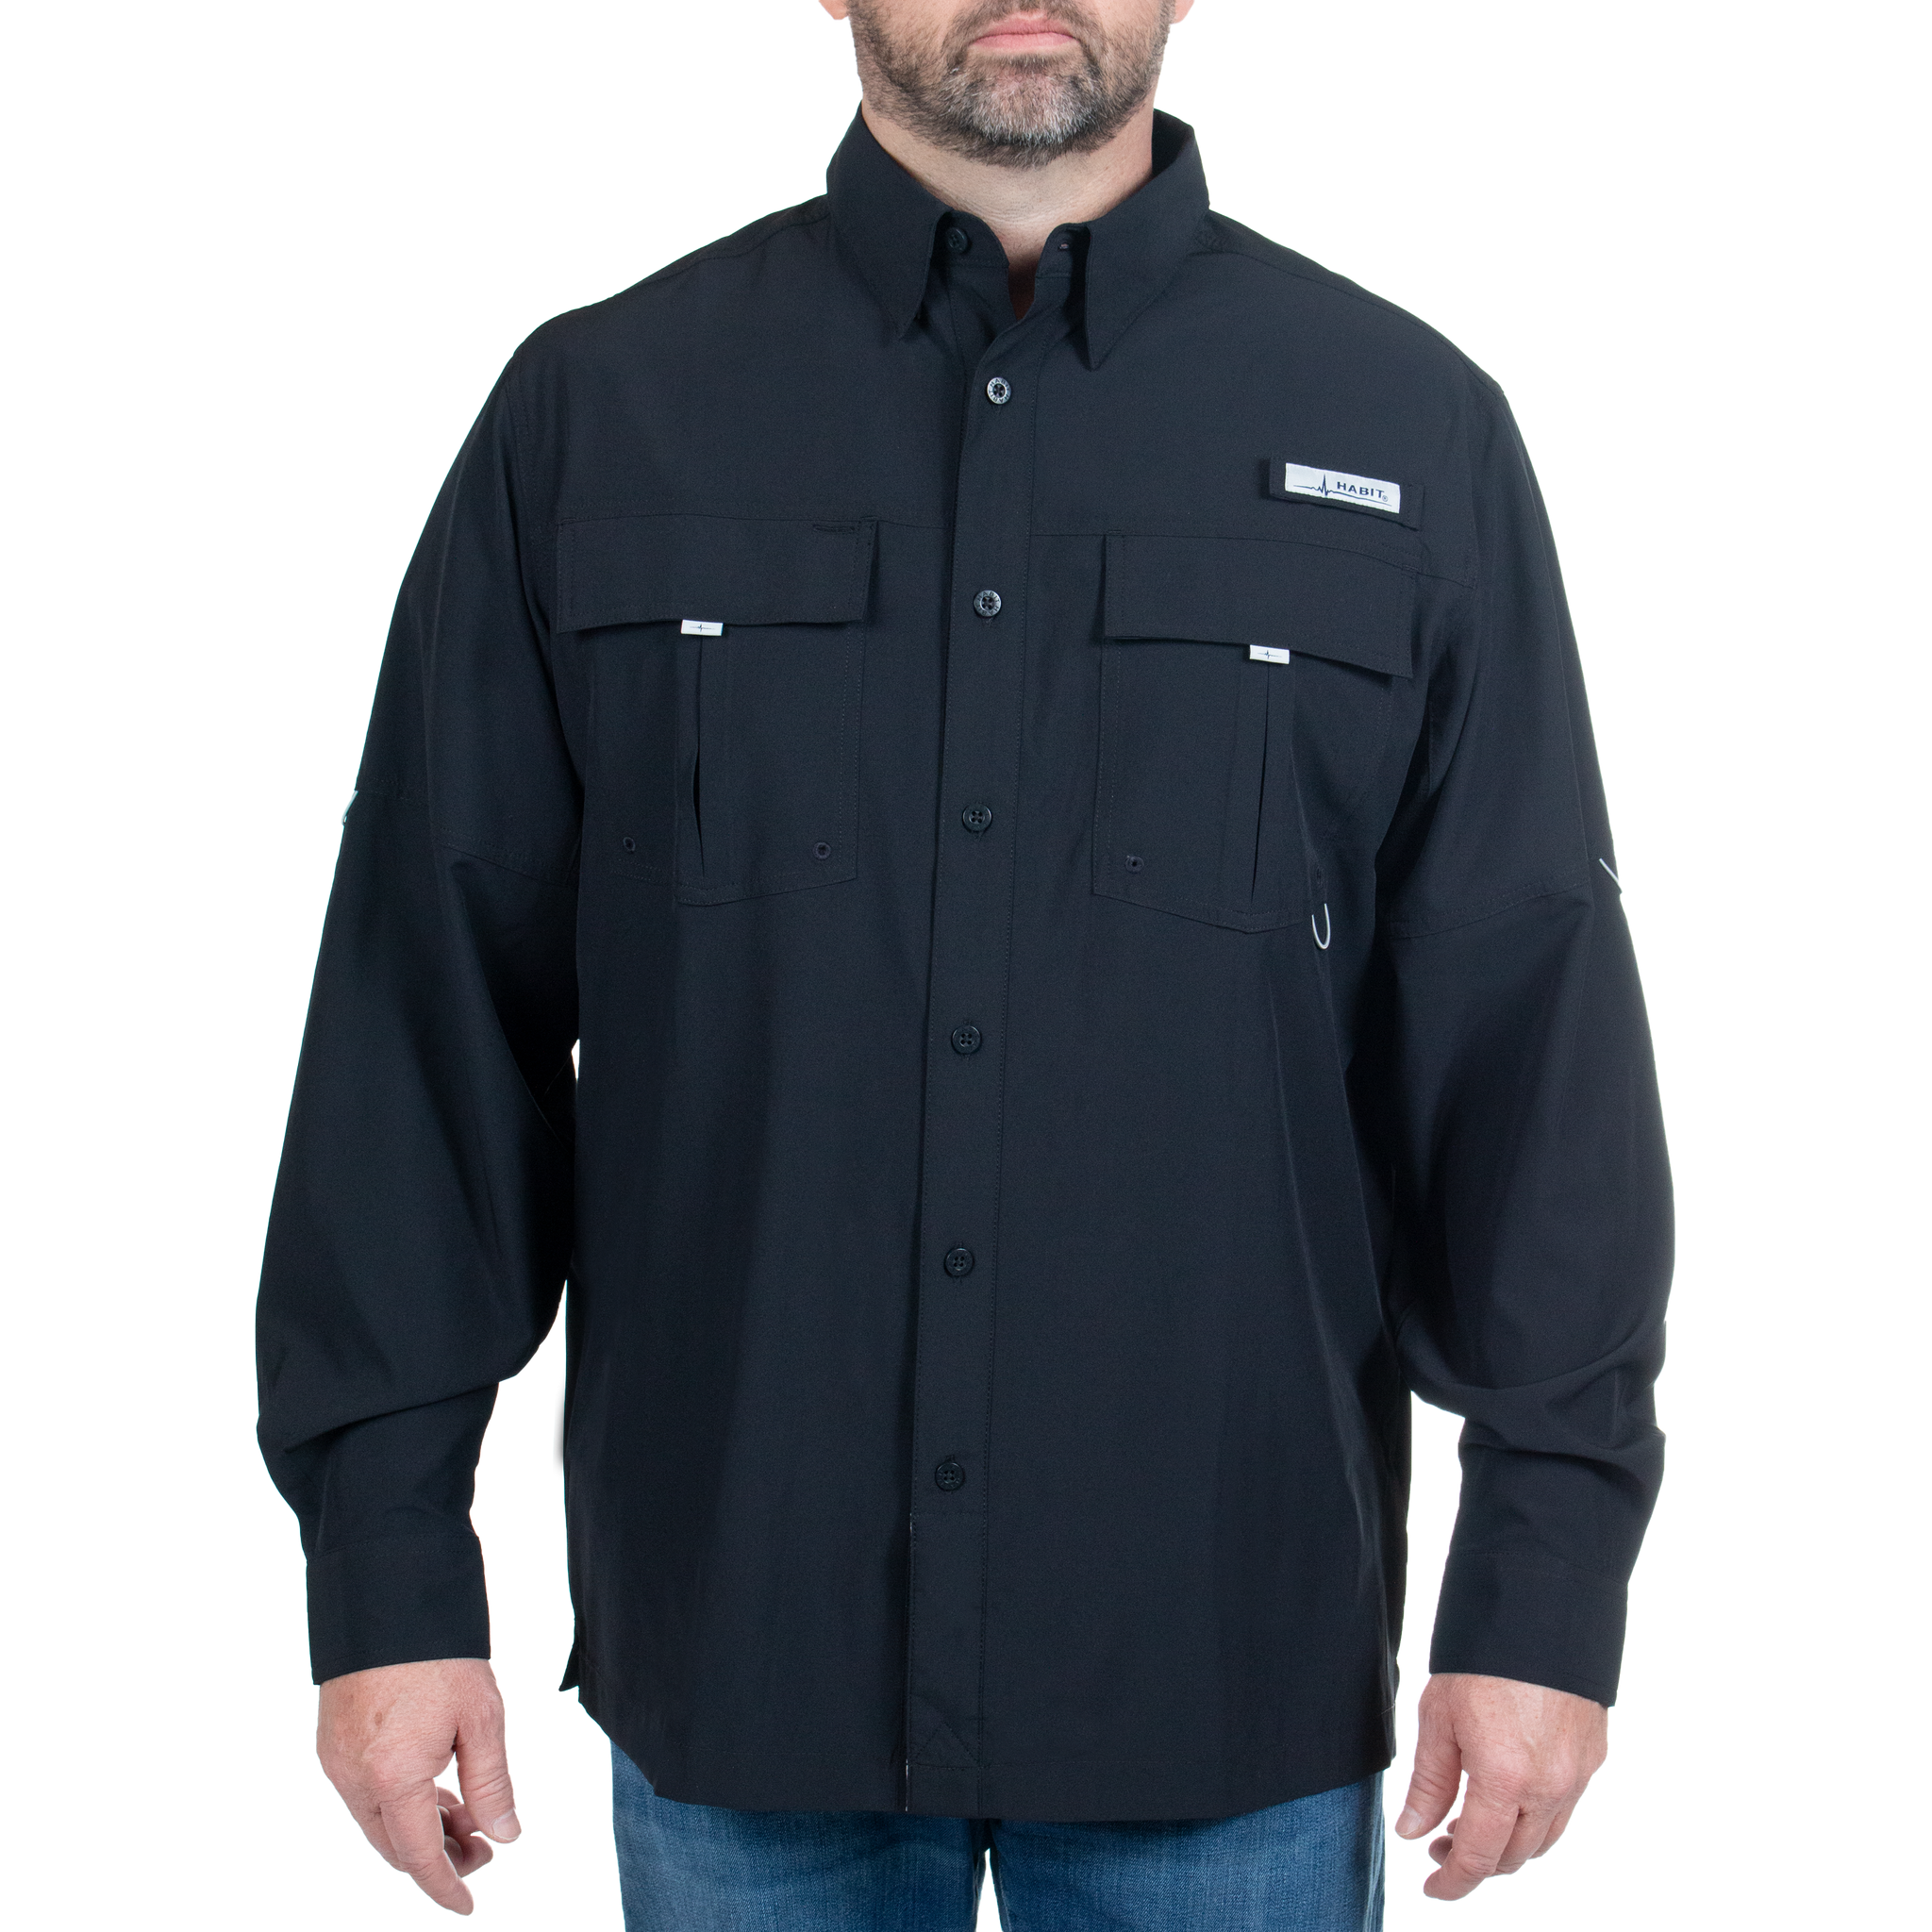 Men’s Forage River Long Sleeve River Guide Fishing Shirt Black front on model